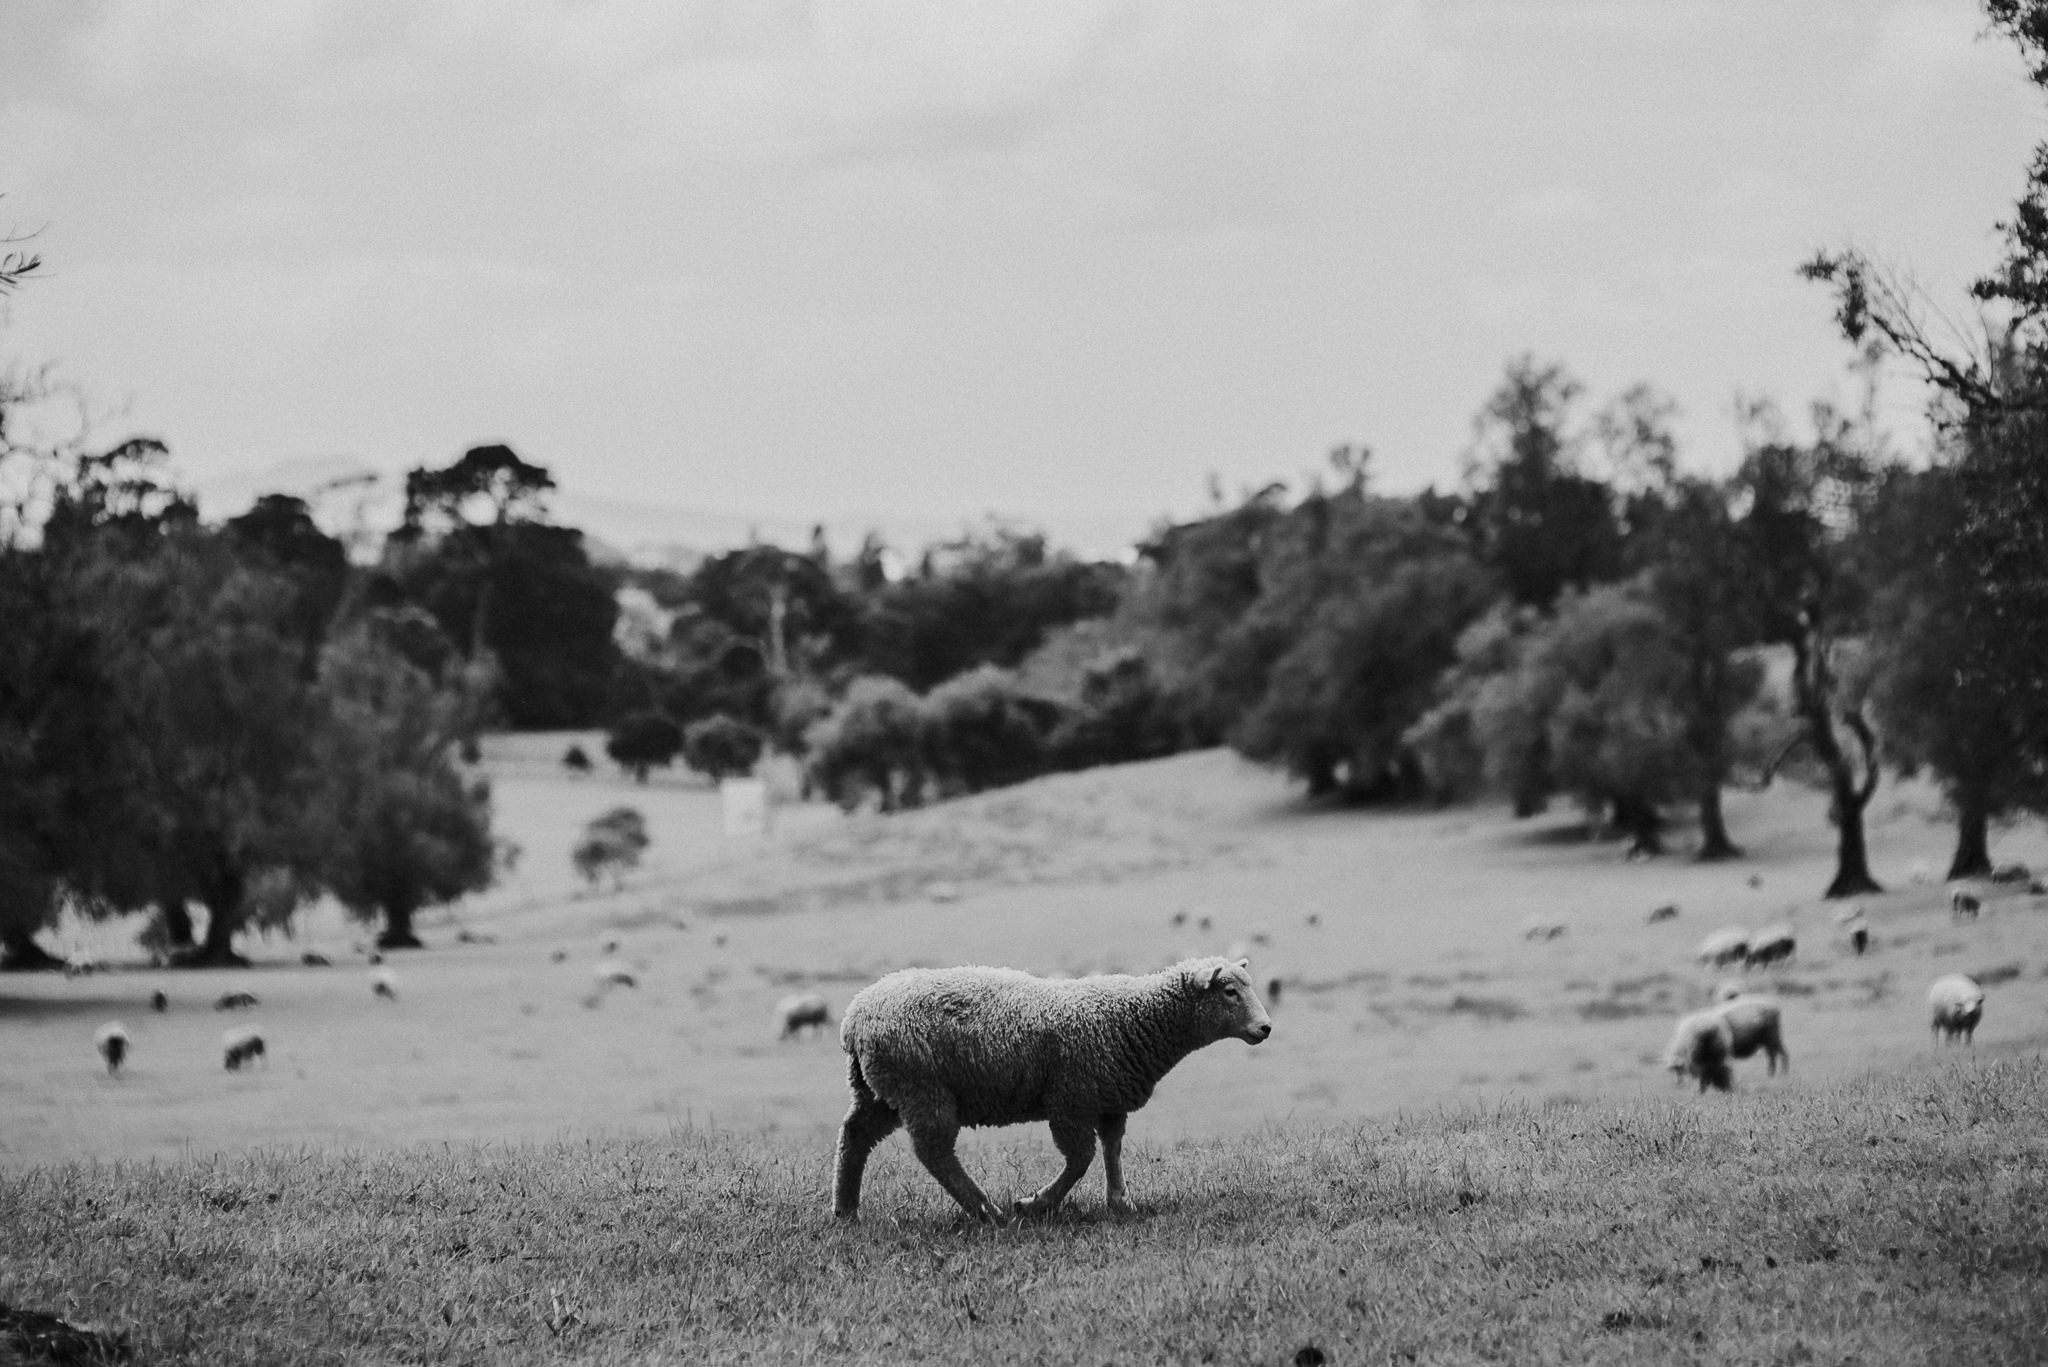 Cornwall Park Sheep, Auckland